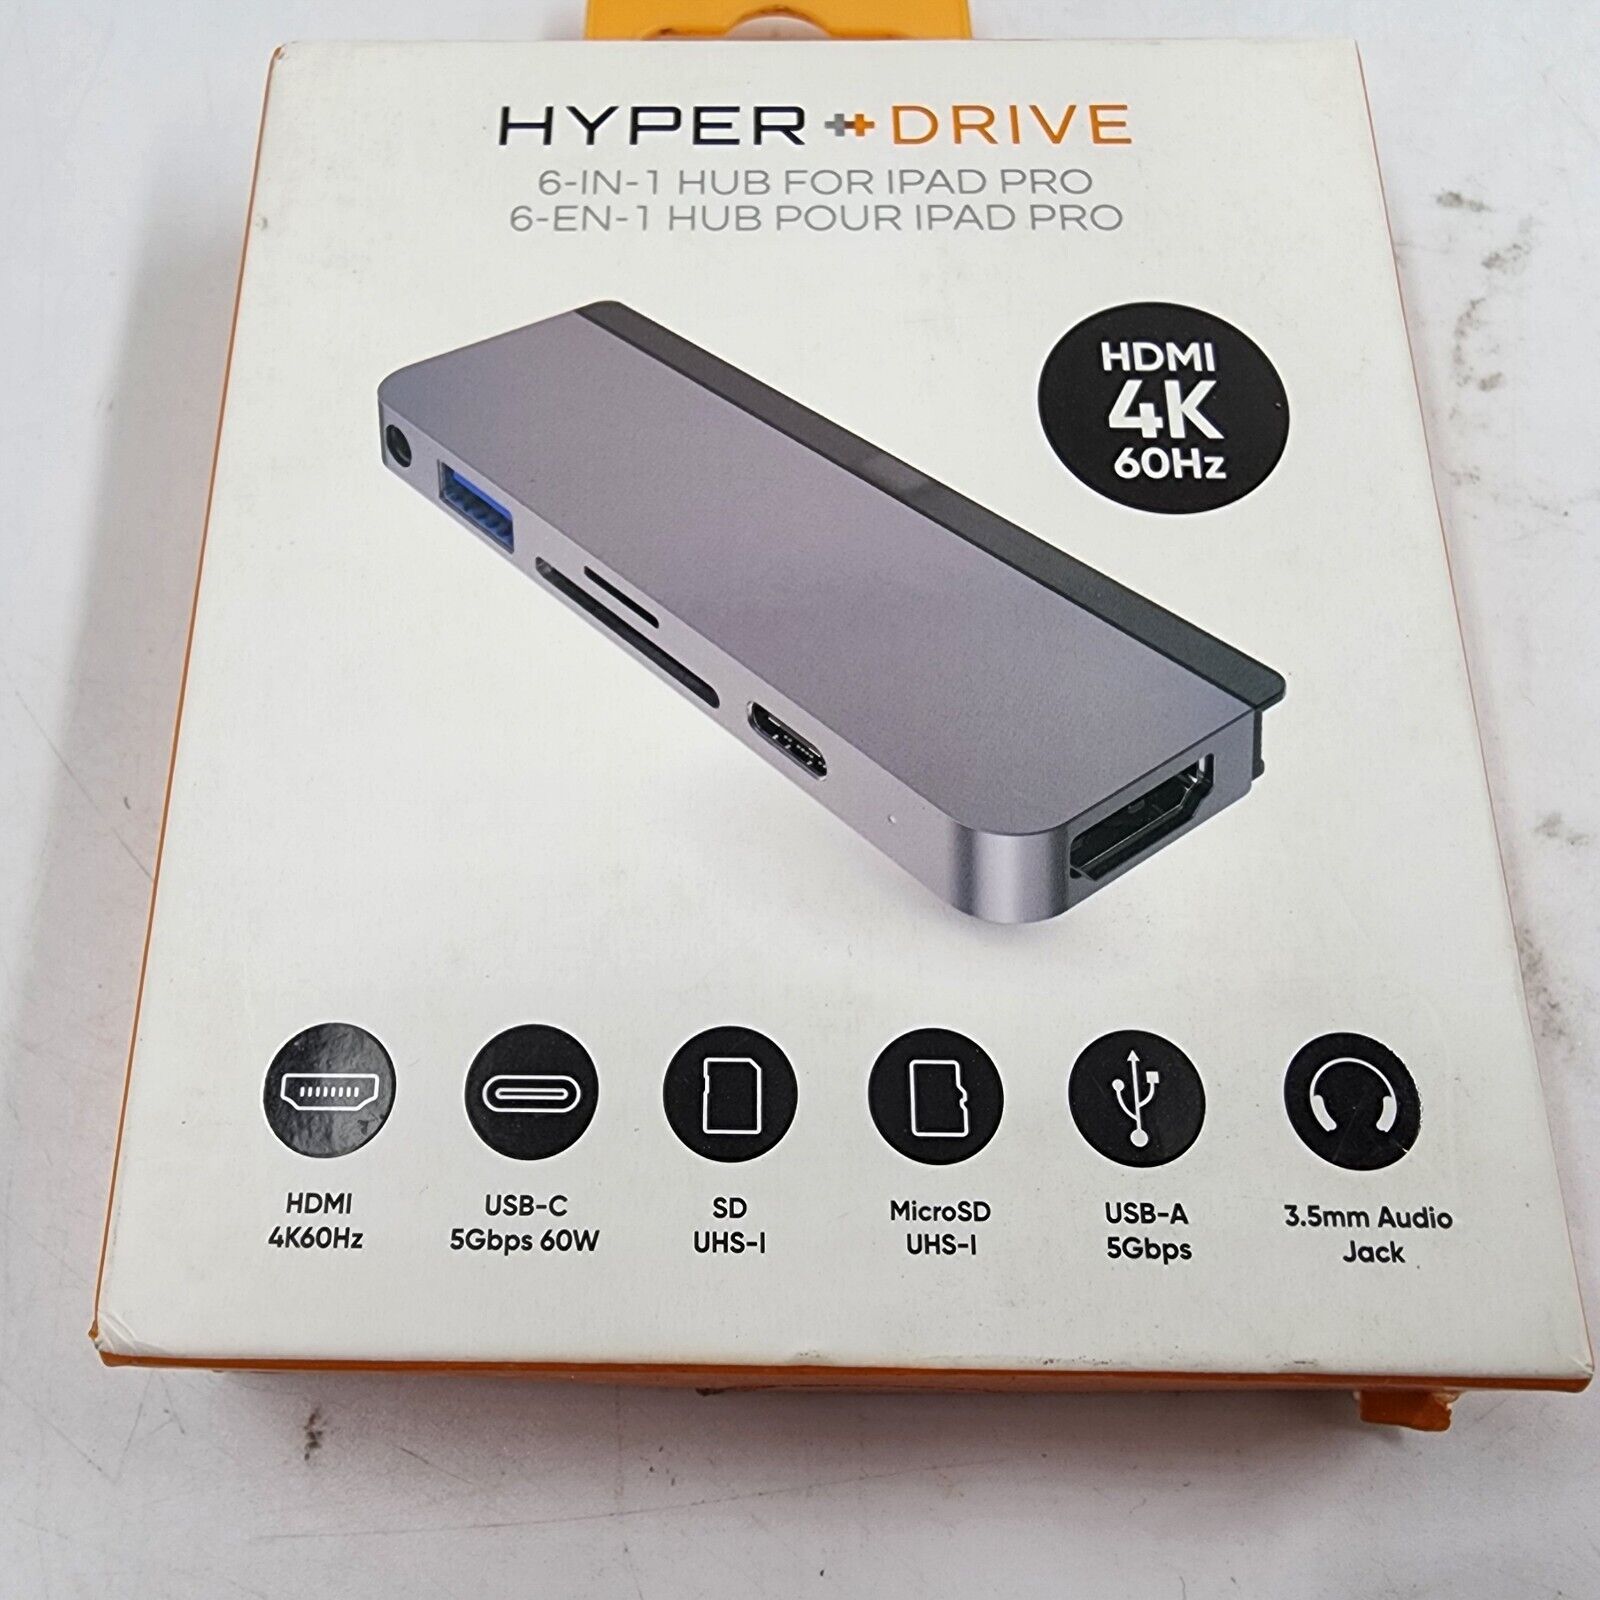 HyperDrive 6-in-1 USB-C Hub for iPad Pro/Air 4K HDMI microSD SD USB-A - Gray